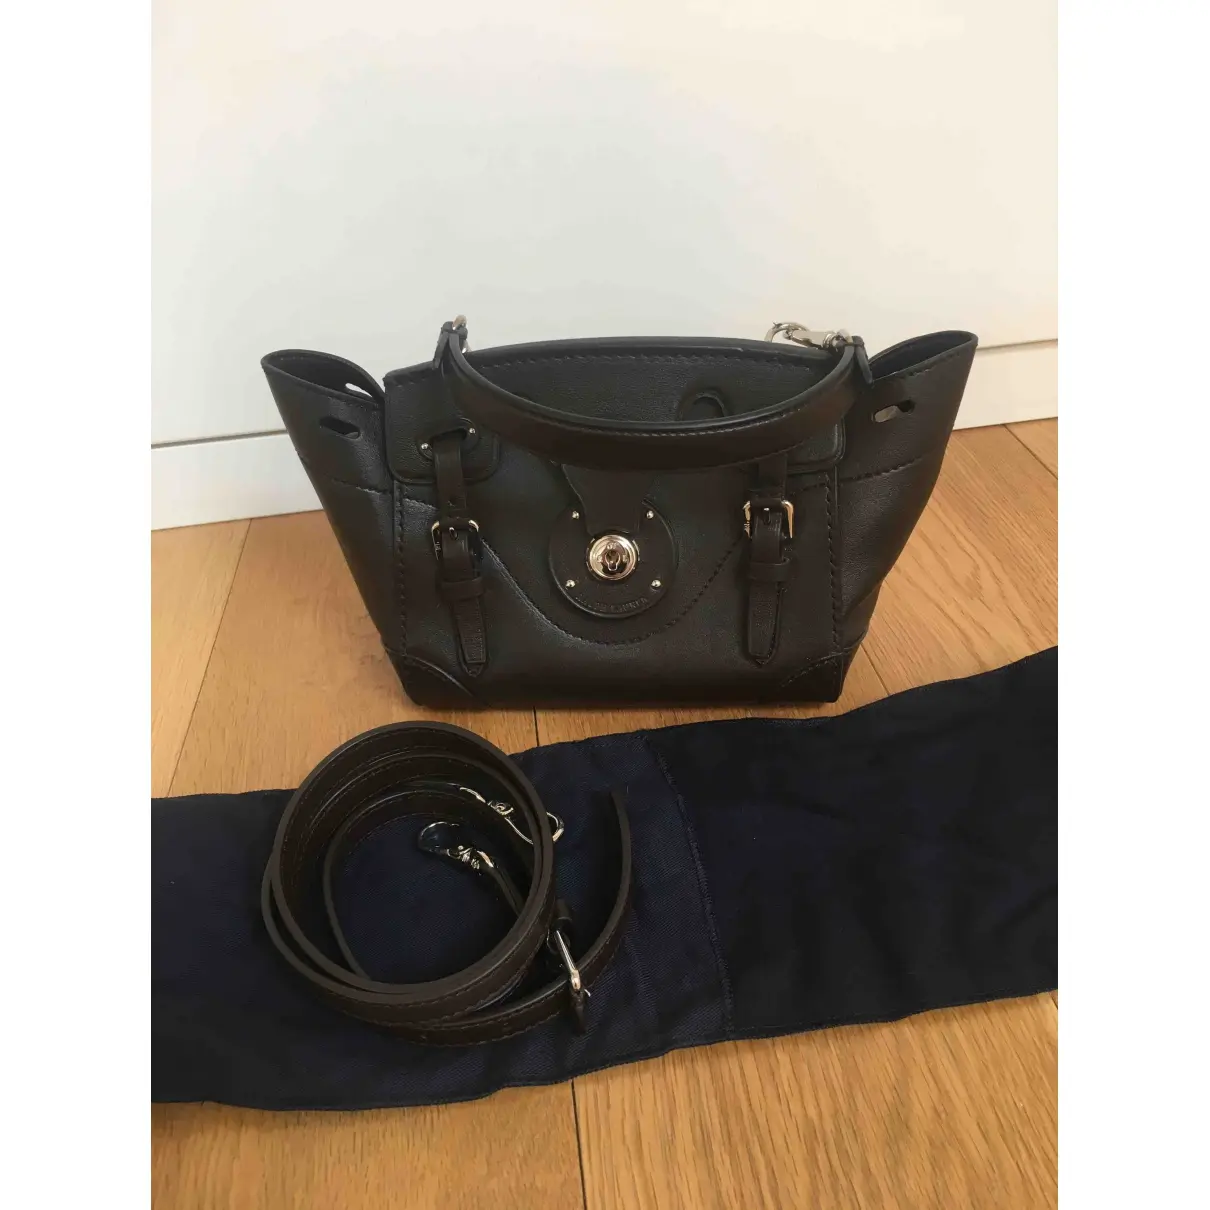 Ricky leather handbag Ralph Lauren Collection